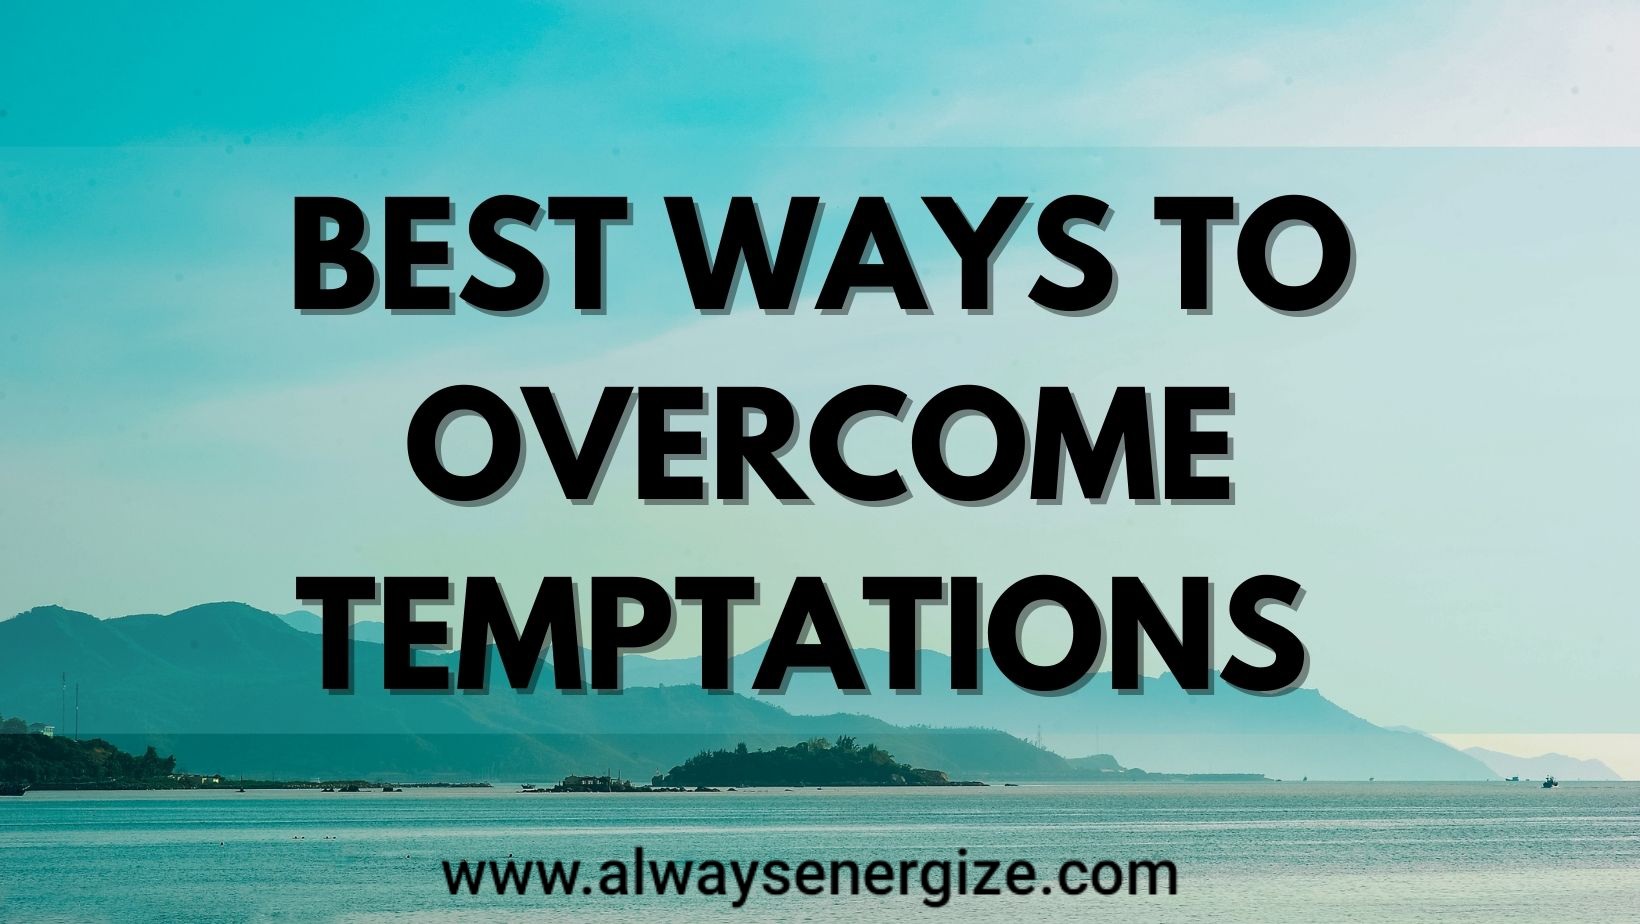 Best ways to overcome temptations